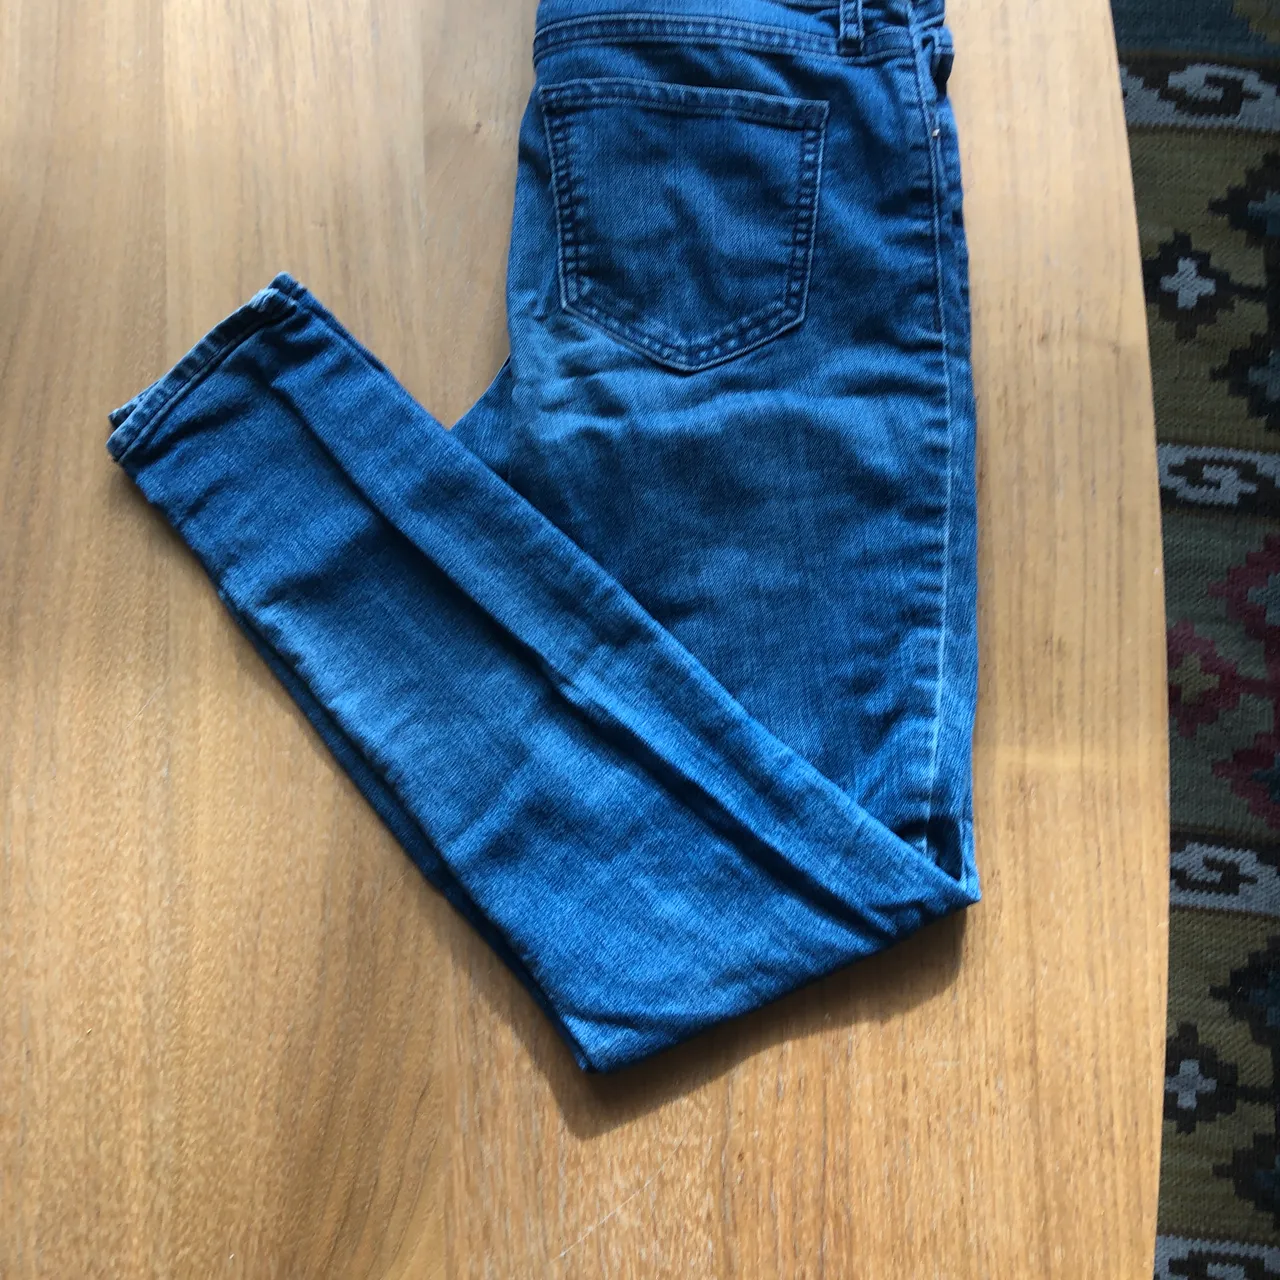 Women’s jeans photo 1